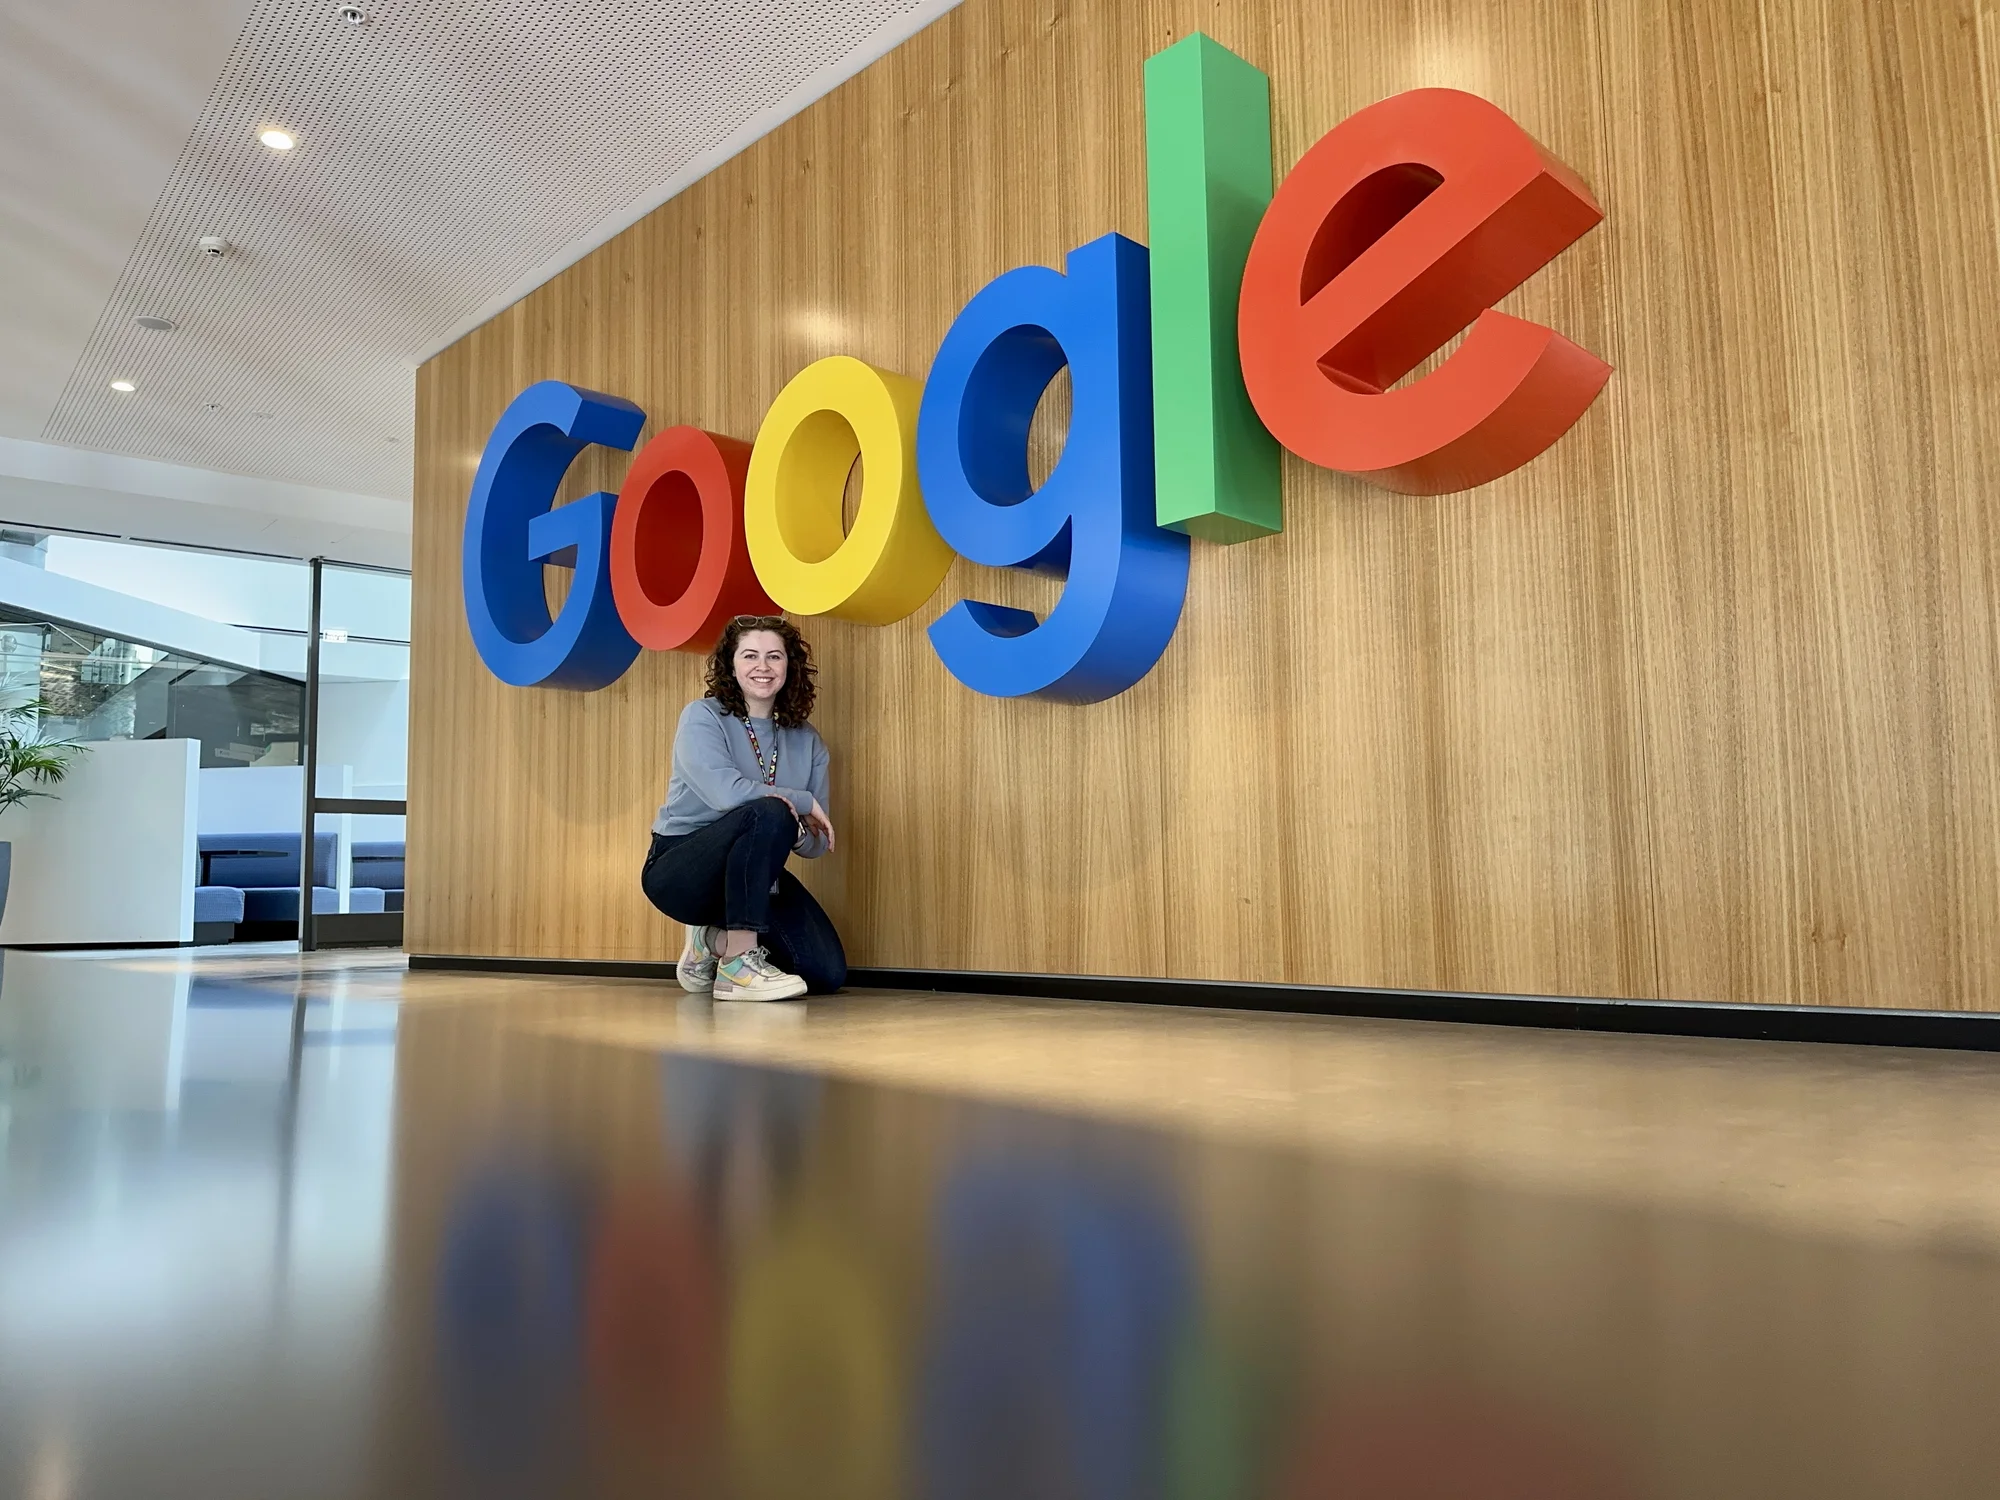 Google intern Lucy Birdsey